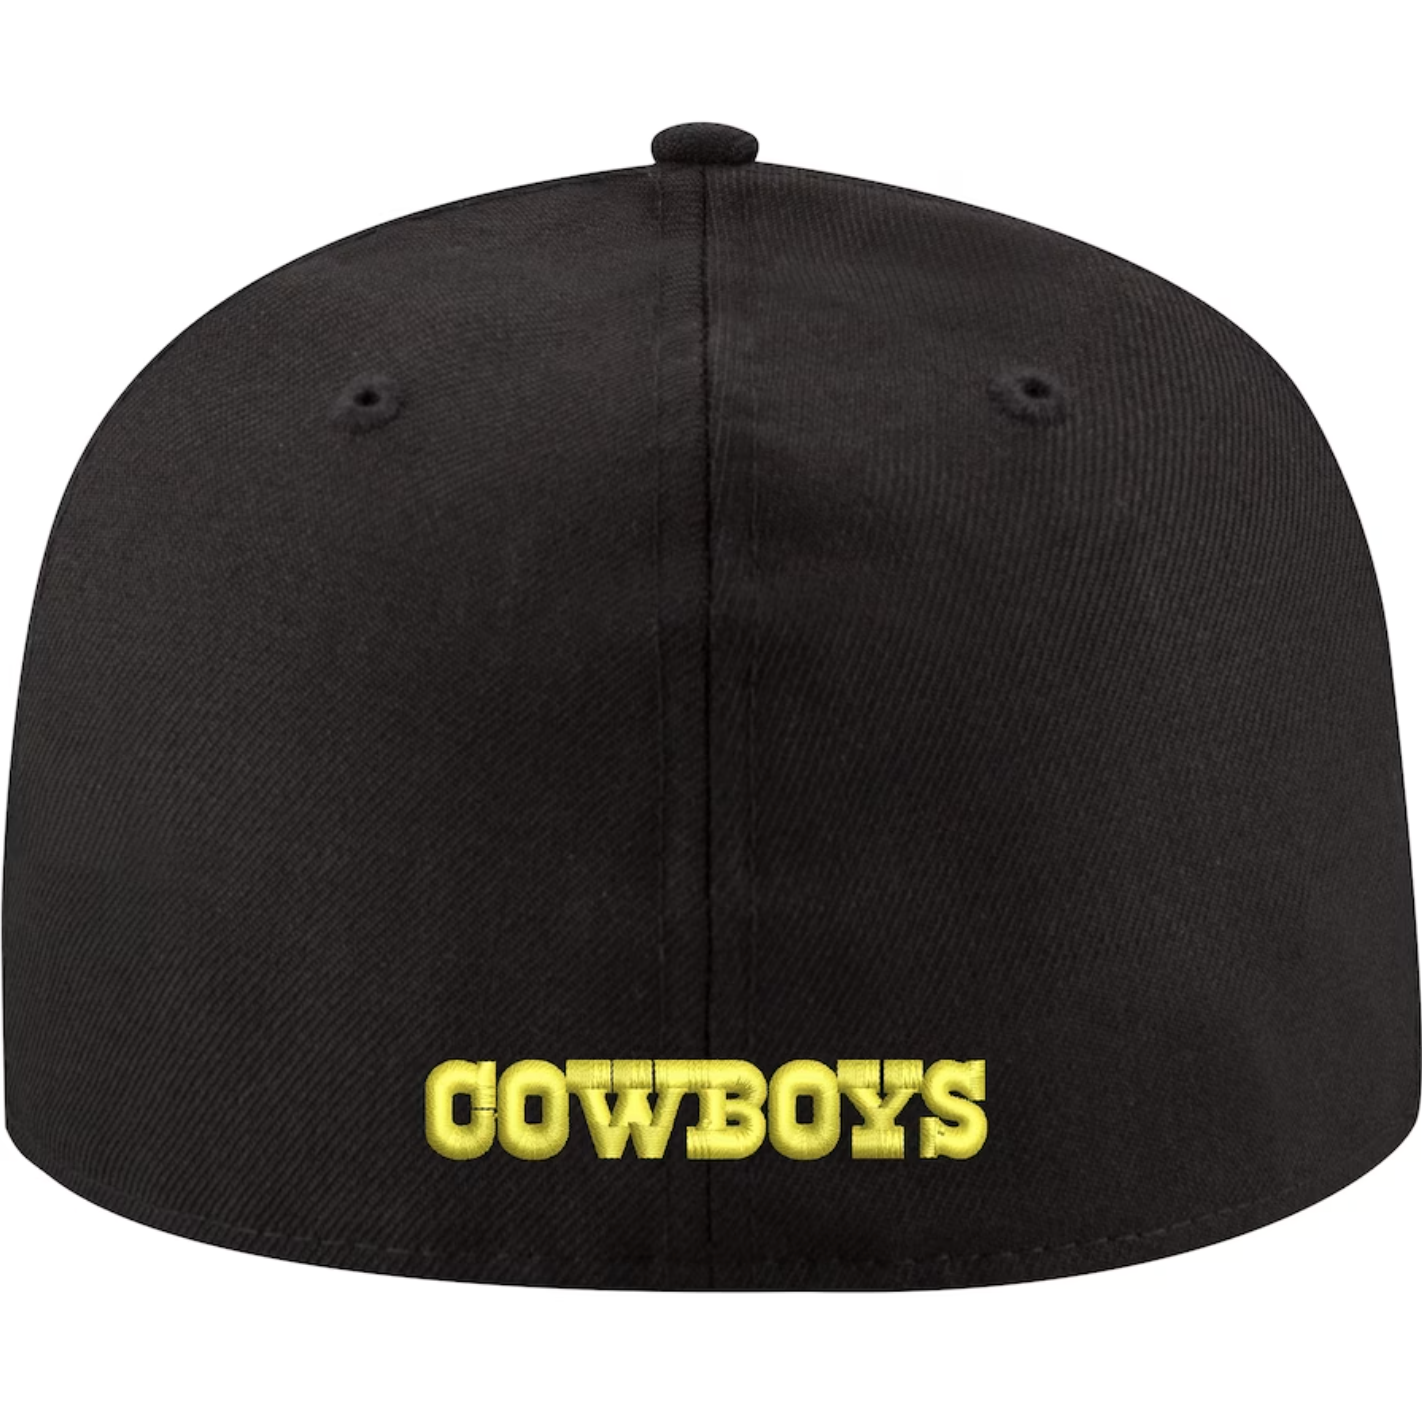 Dallas Cowboys New Era VOLT Exclusive 59Fifty Fitted Hat - Black/Volt